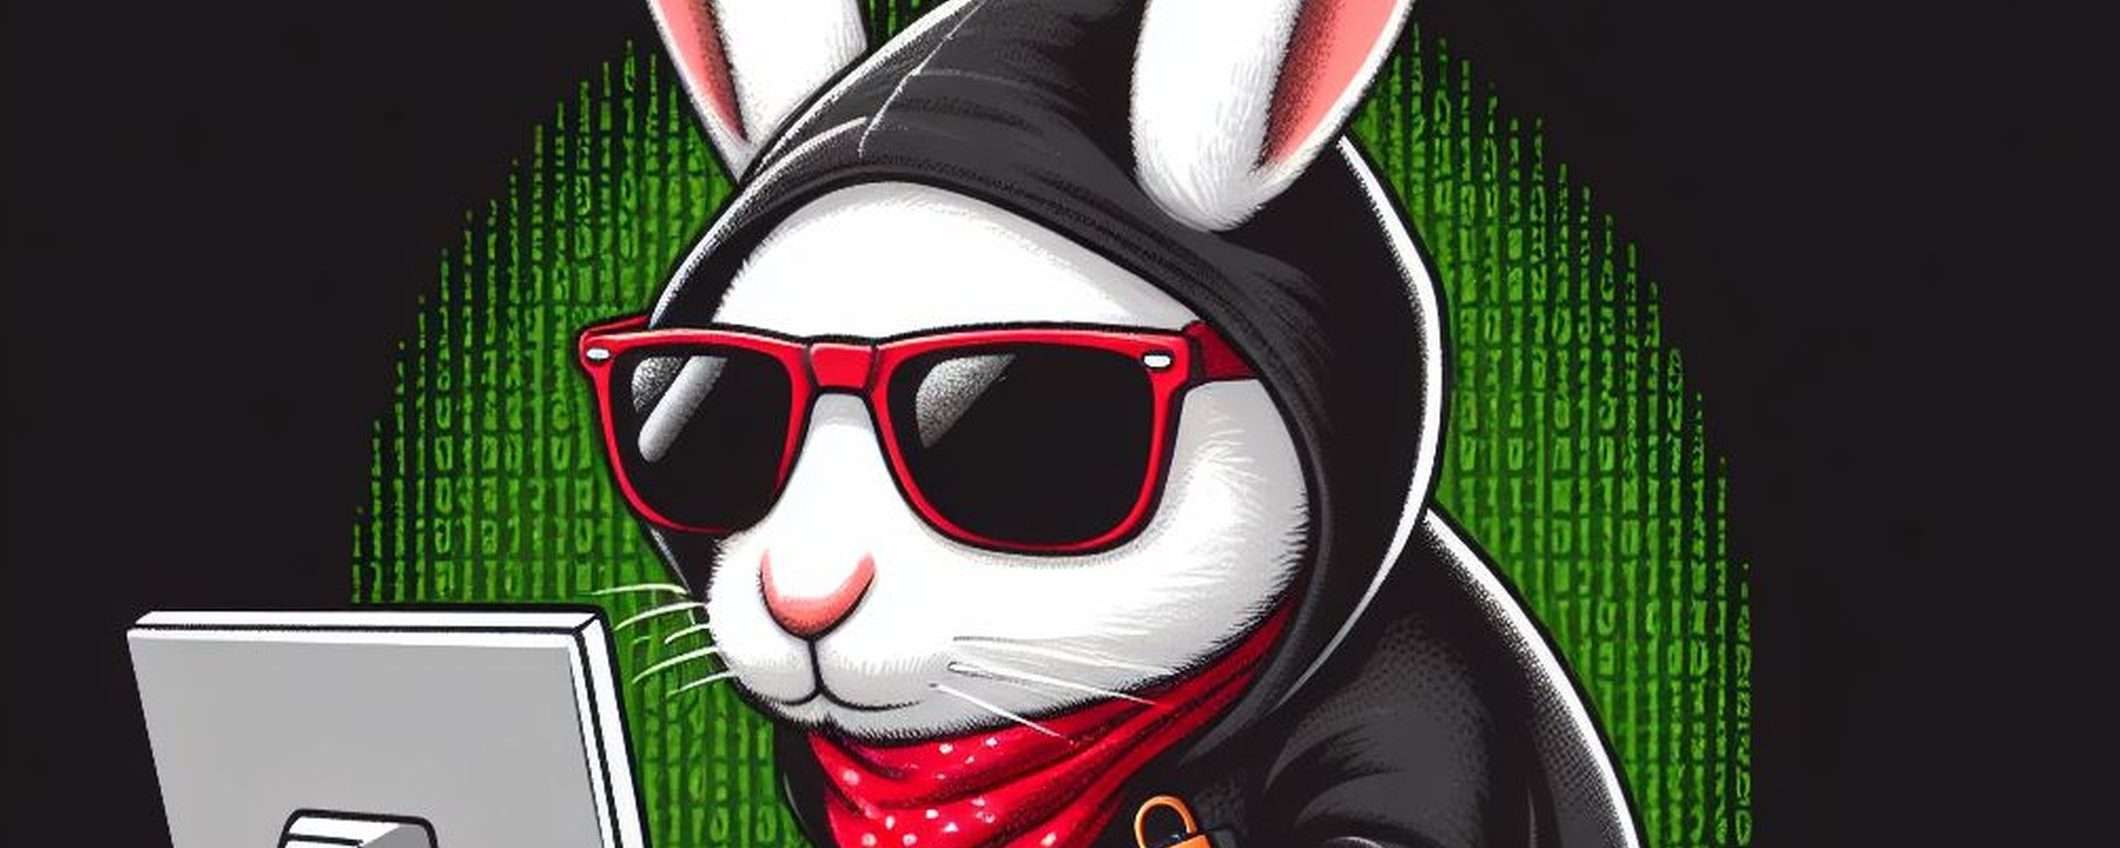 BunnyLoader: nuovo e pericoloso Malware-as-a-Service